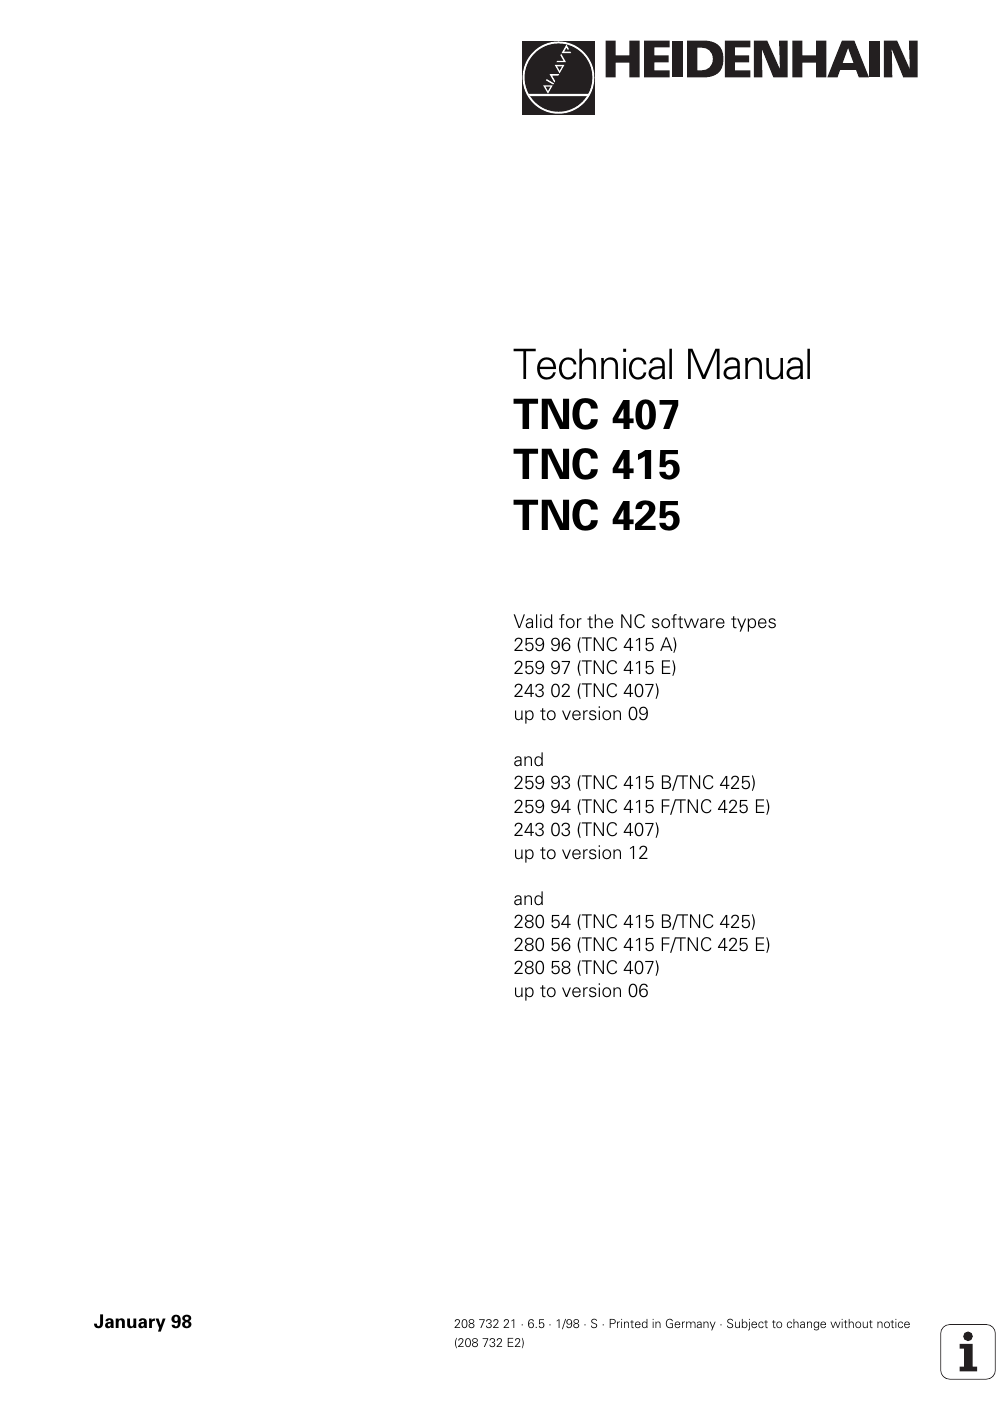 Technical Manual Tnc 407 Tnc 415 B Tnc 425 Manualzz